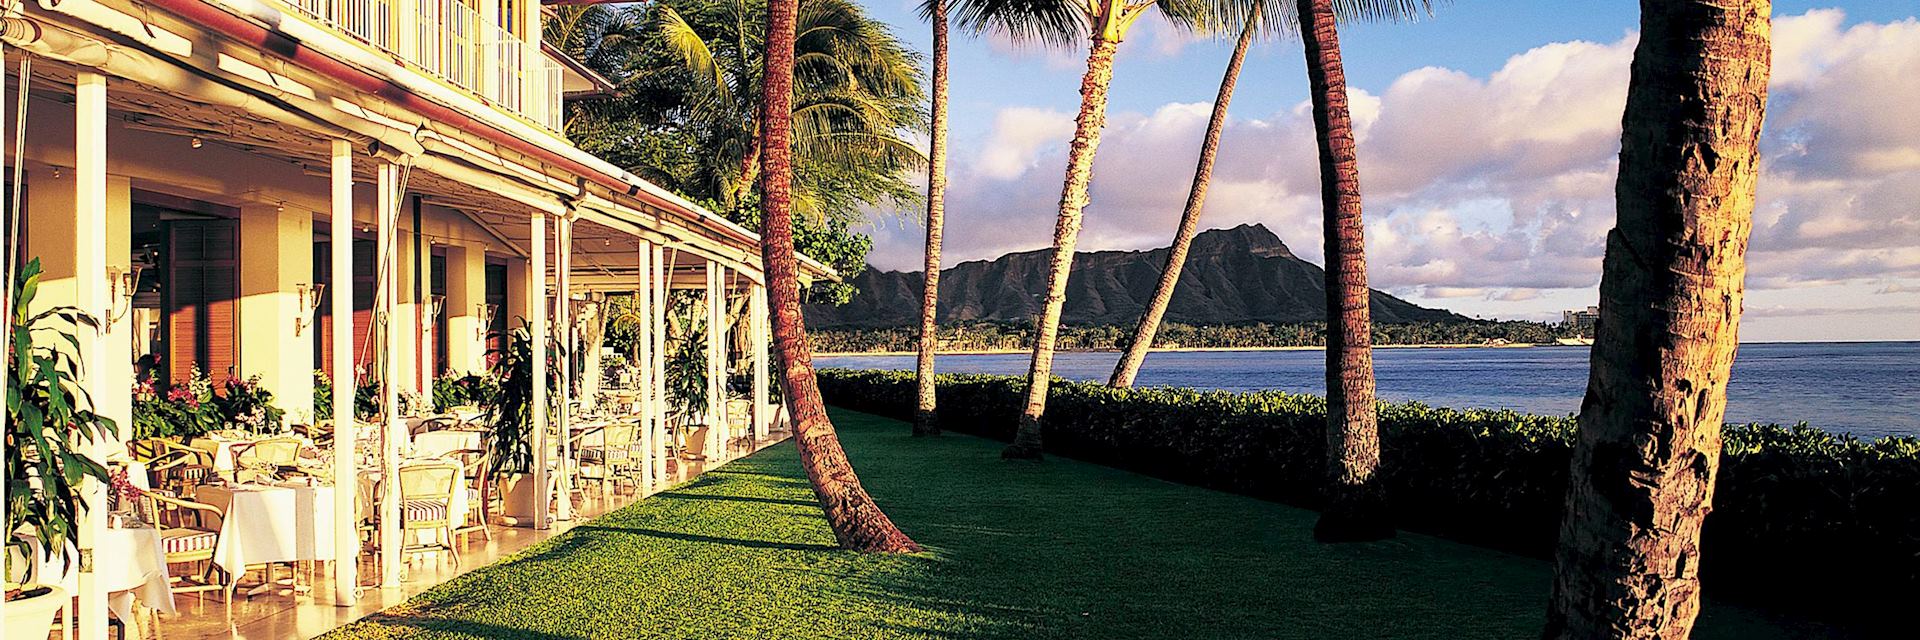 Halekulani Hotel Hotels In Oahu Audley Travel